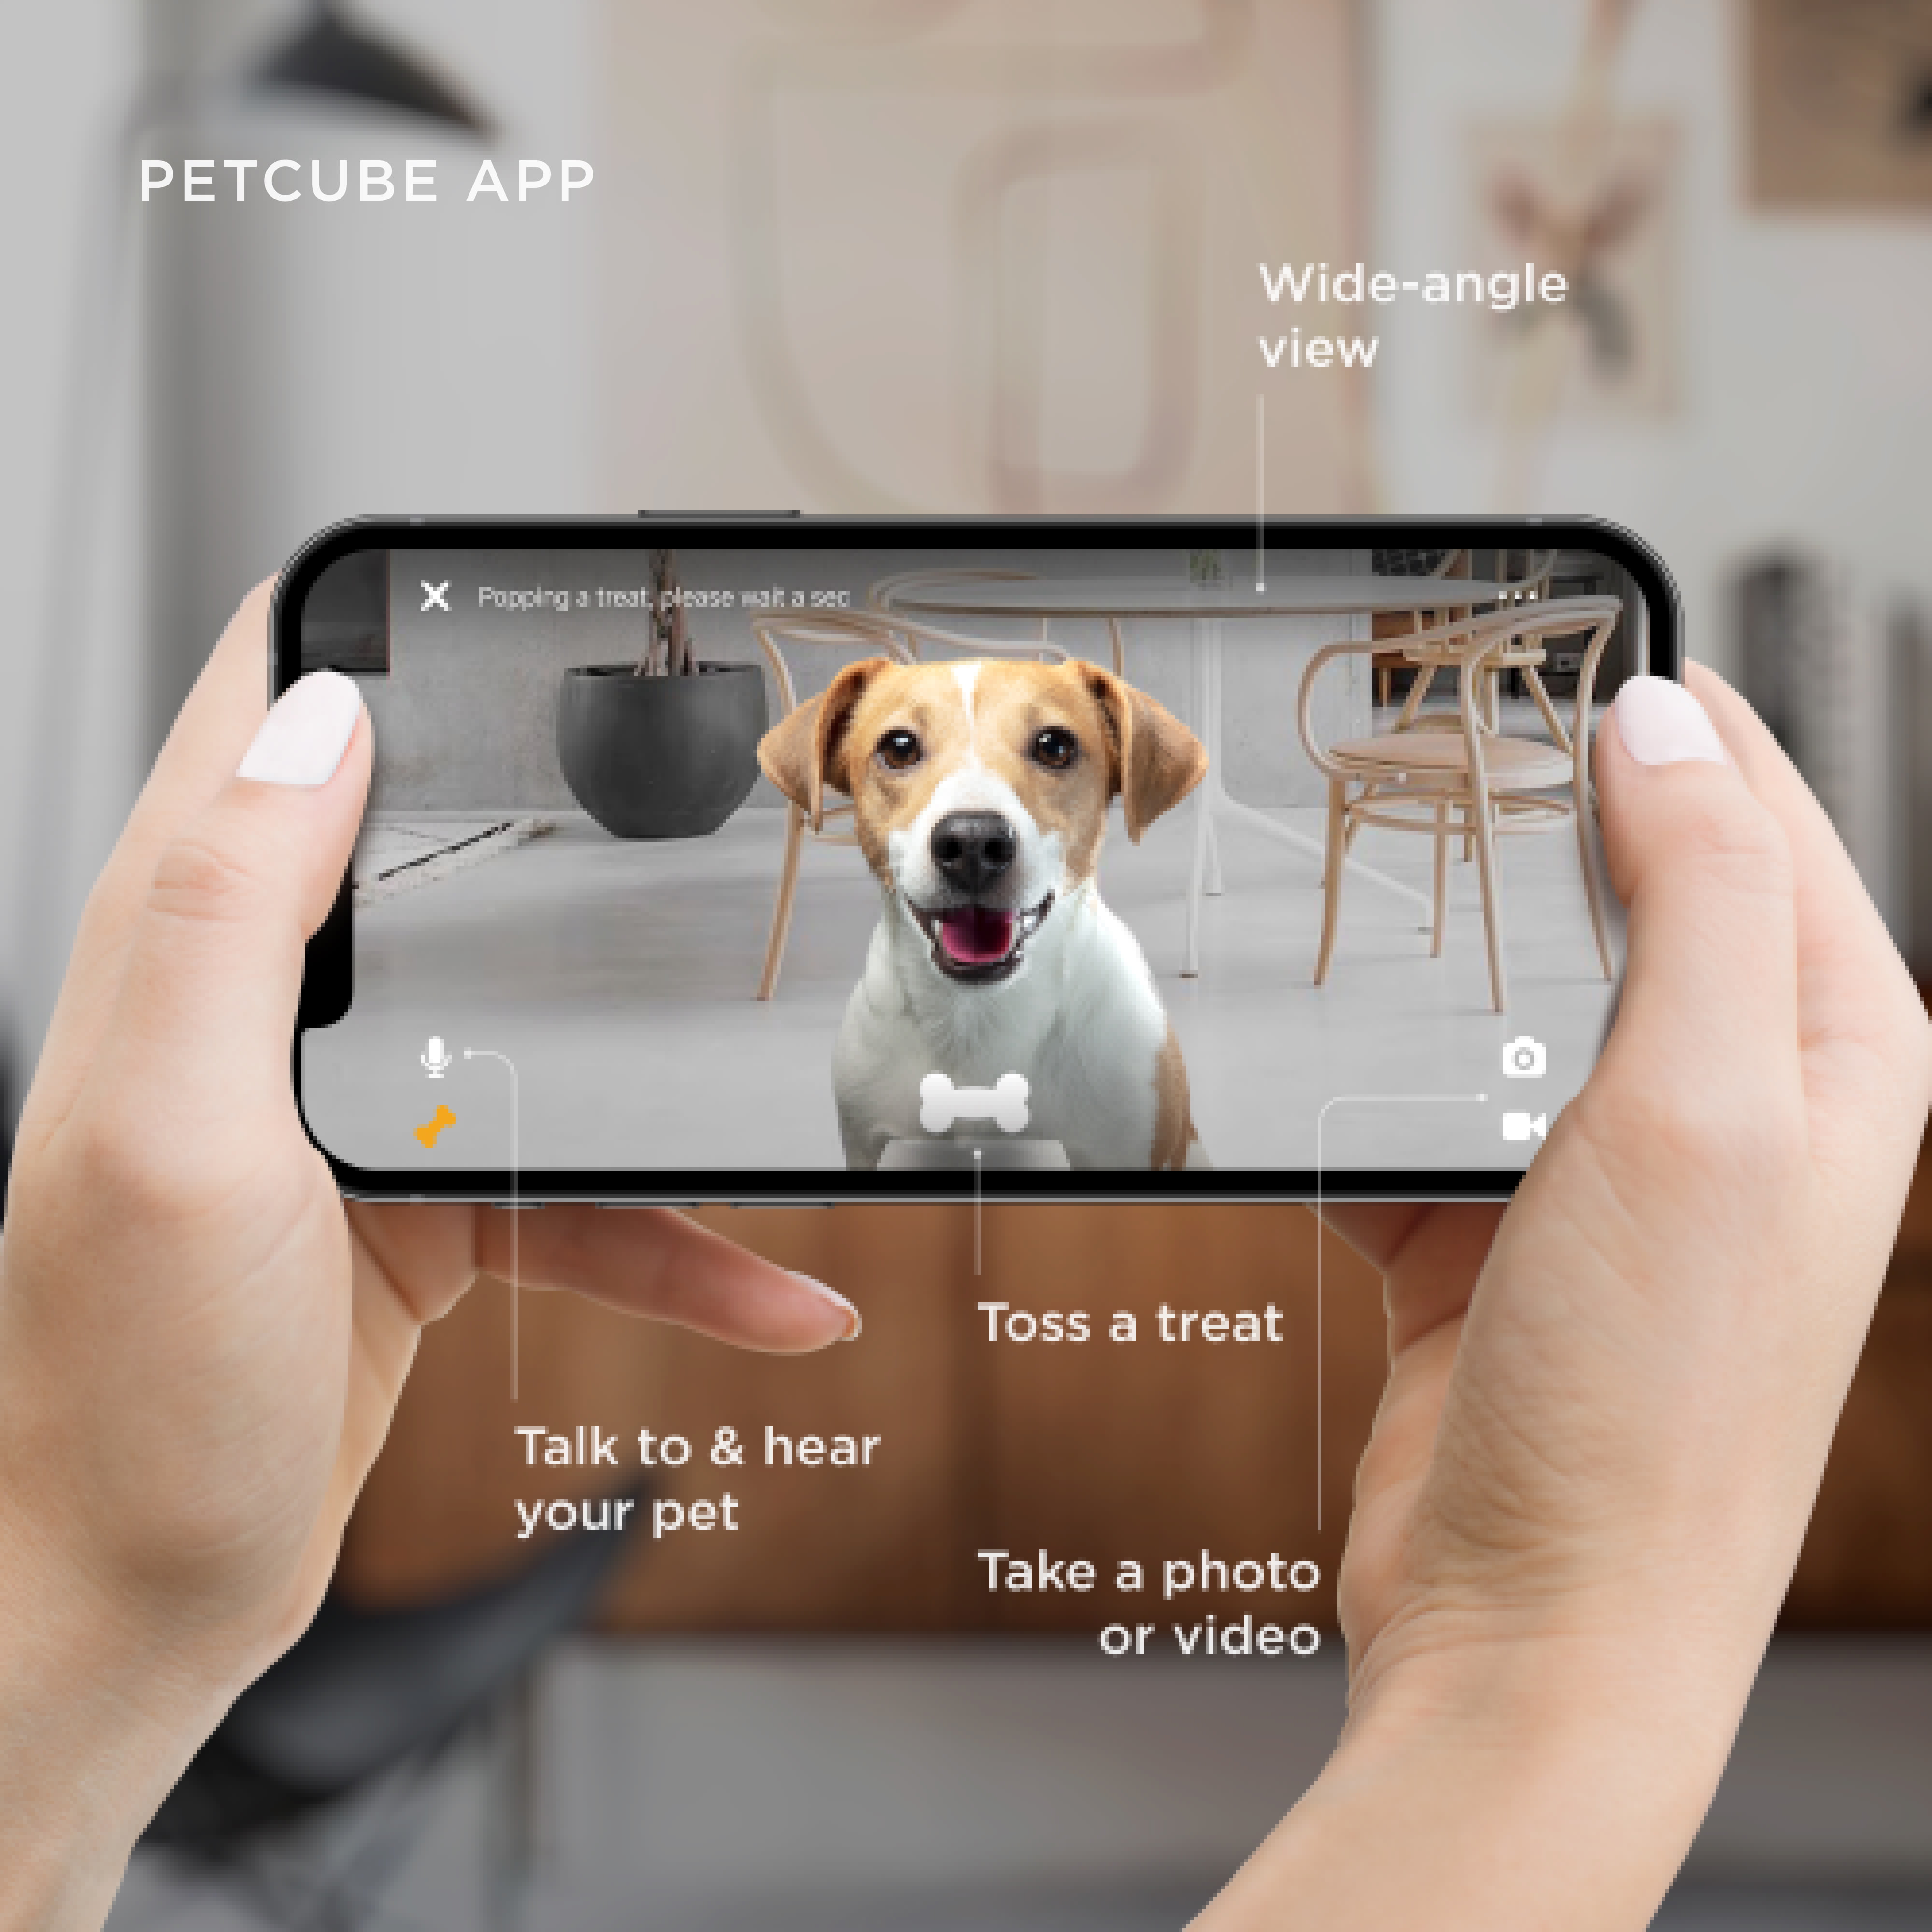 Petcube Bites 2 Lite Interactive WiFi Pet Monitoring Camera with Phone App and Treat Dispenser